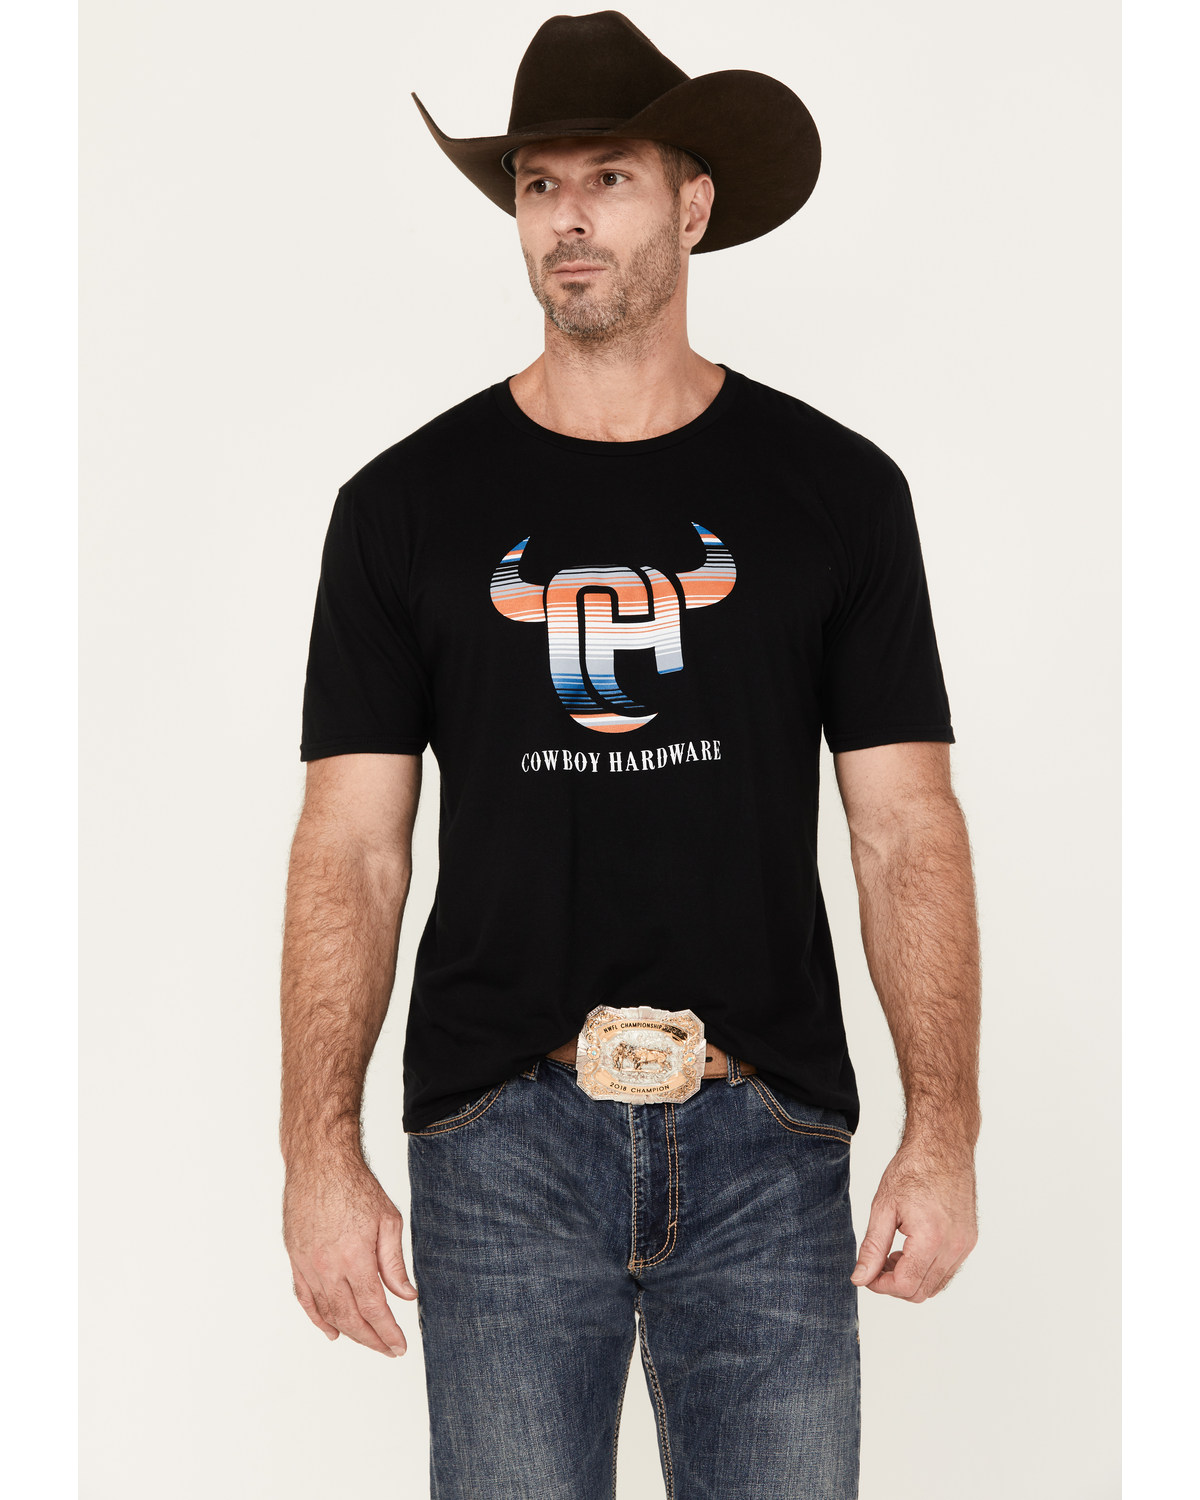 Cowboy Hardware Men's Serape Short Sleeve Graphic T-Shirt